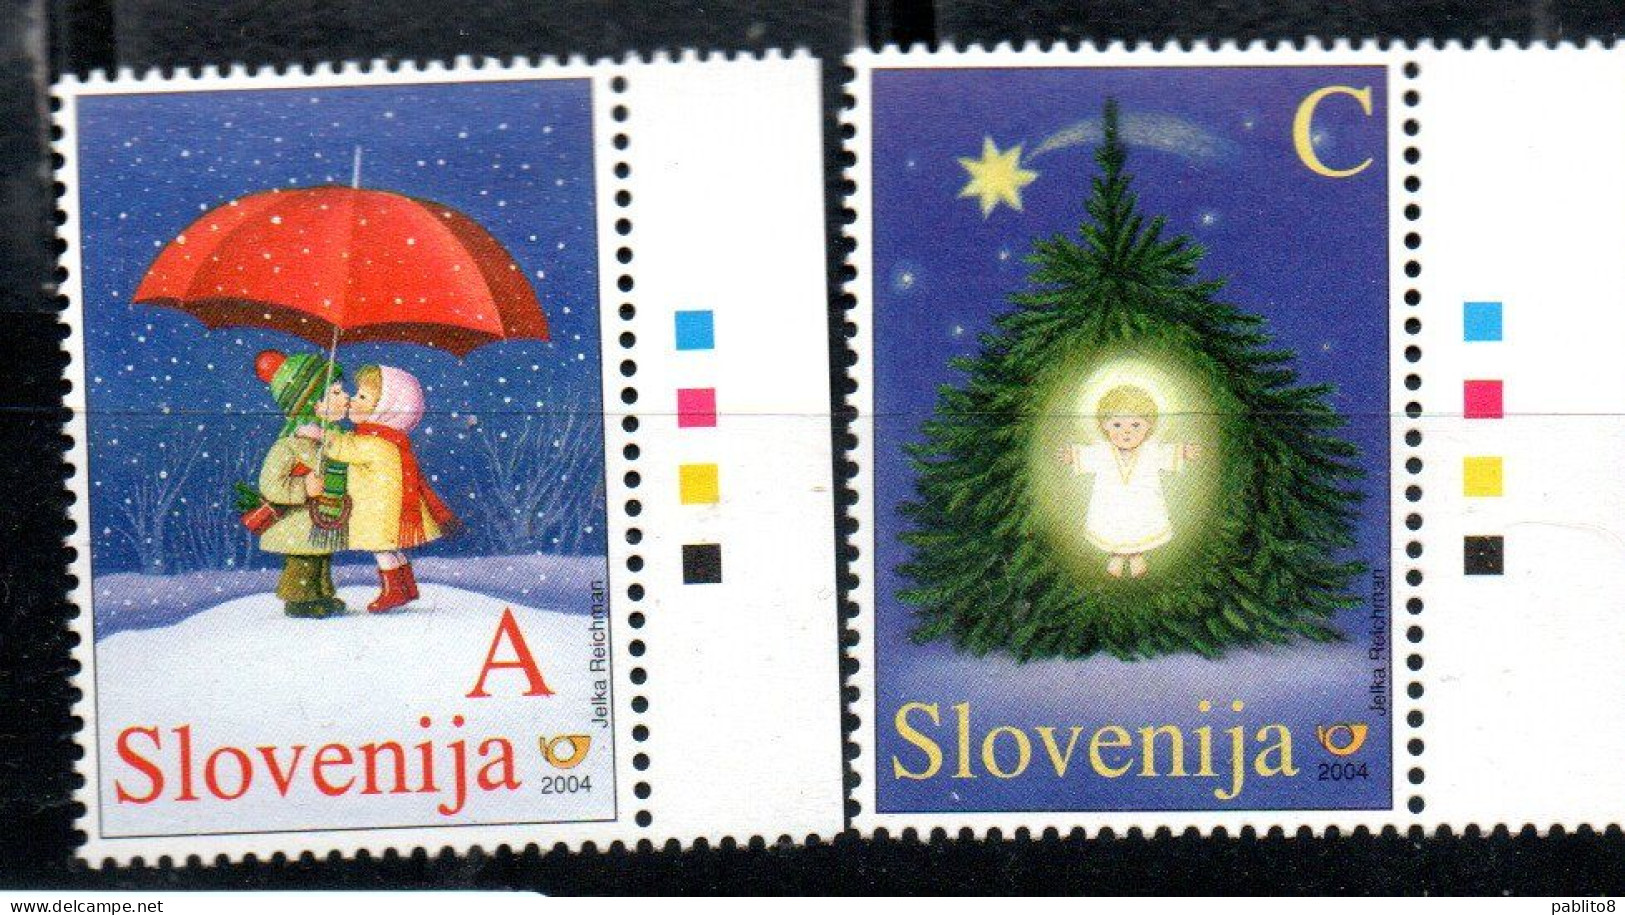 SLOVENIA SLOVENIJA SLOVENIE SLOWENIEN 2004 CHRISTMAS NATALE NOEL WEIHNACHTEN NAVIDAD COMPLETE SET SERIE COMPLETA MNH - Eslovenia